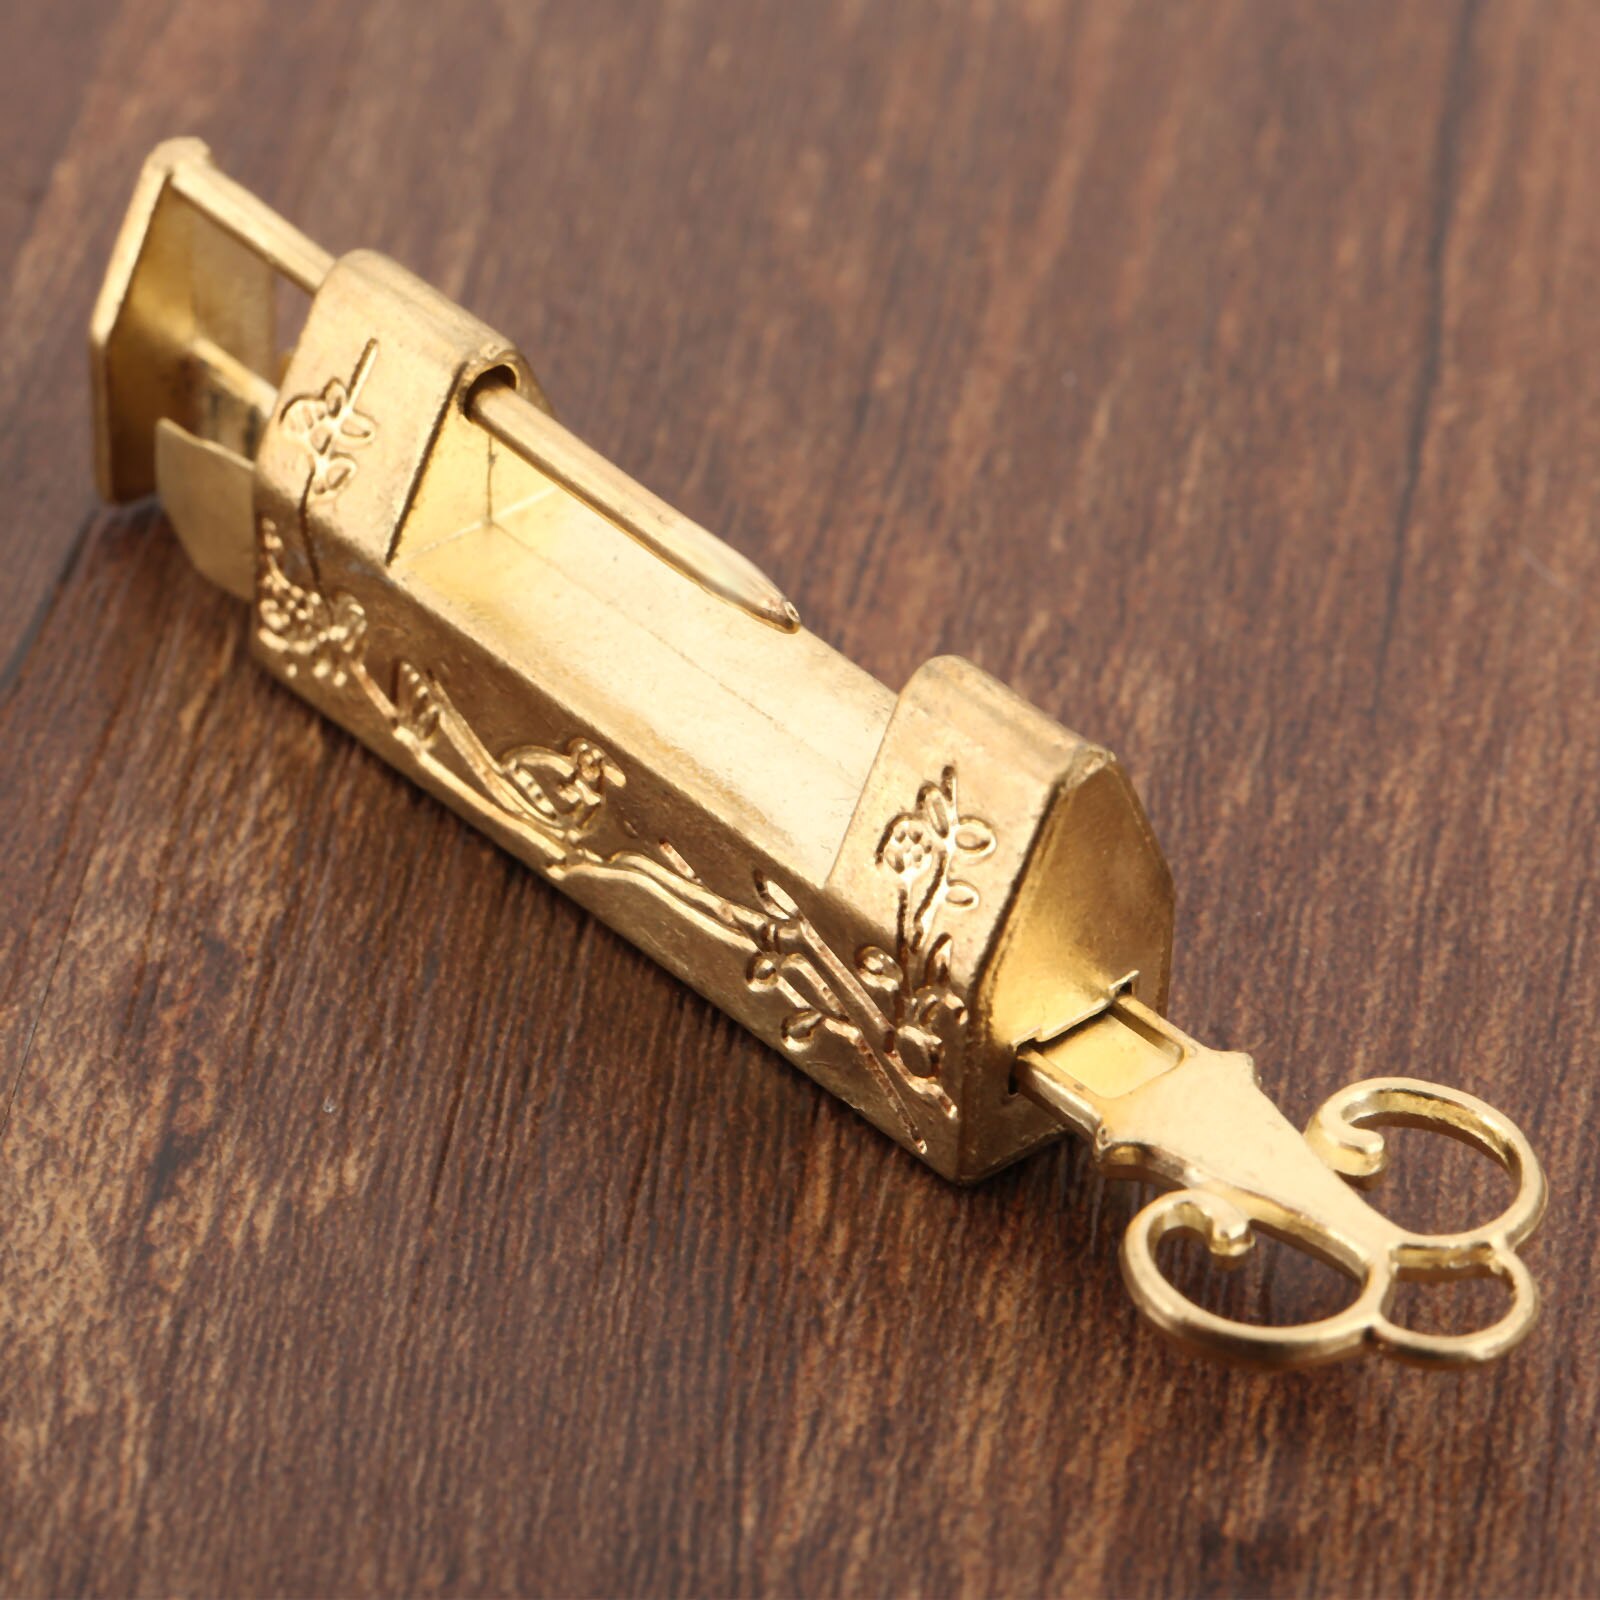 1Set Vintage Gouden Slot + Sleutel 42Mm Oude Chinese Retro Messing Hangslot Antieke Decor Bloem Vogel Sieraden Houten box Case Deur Zak